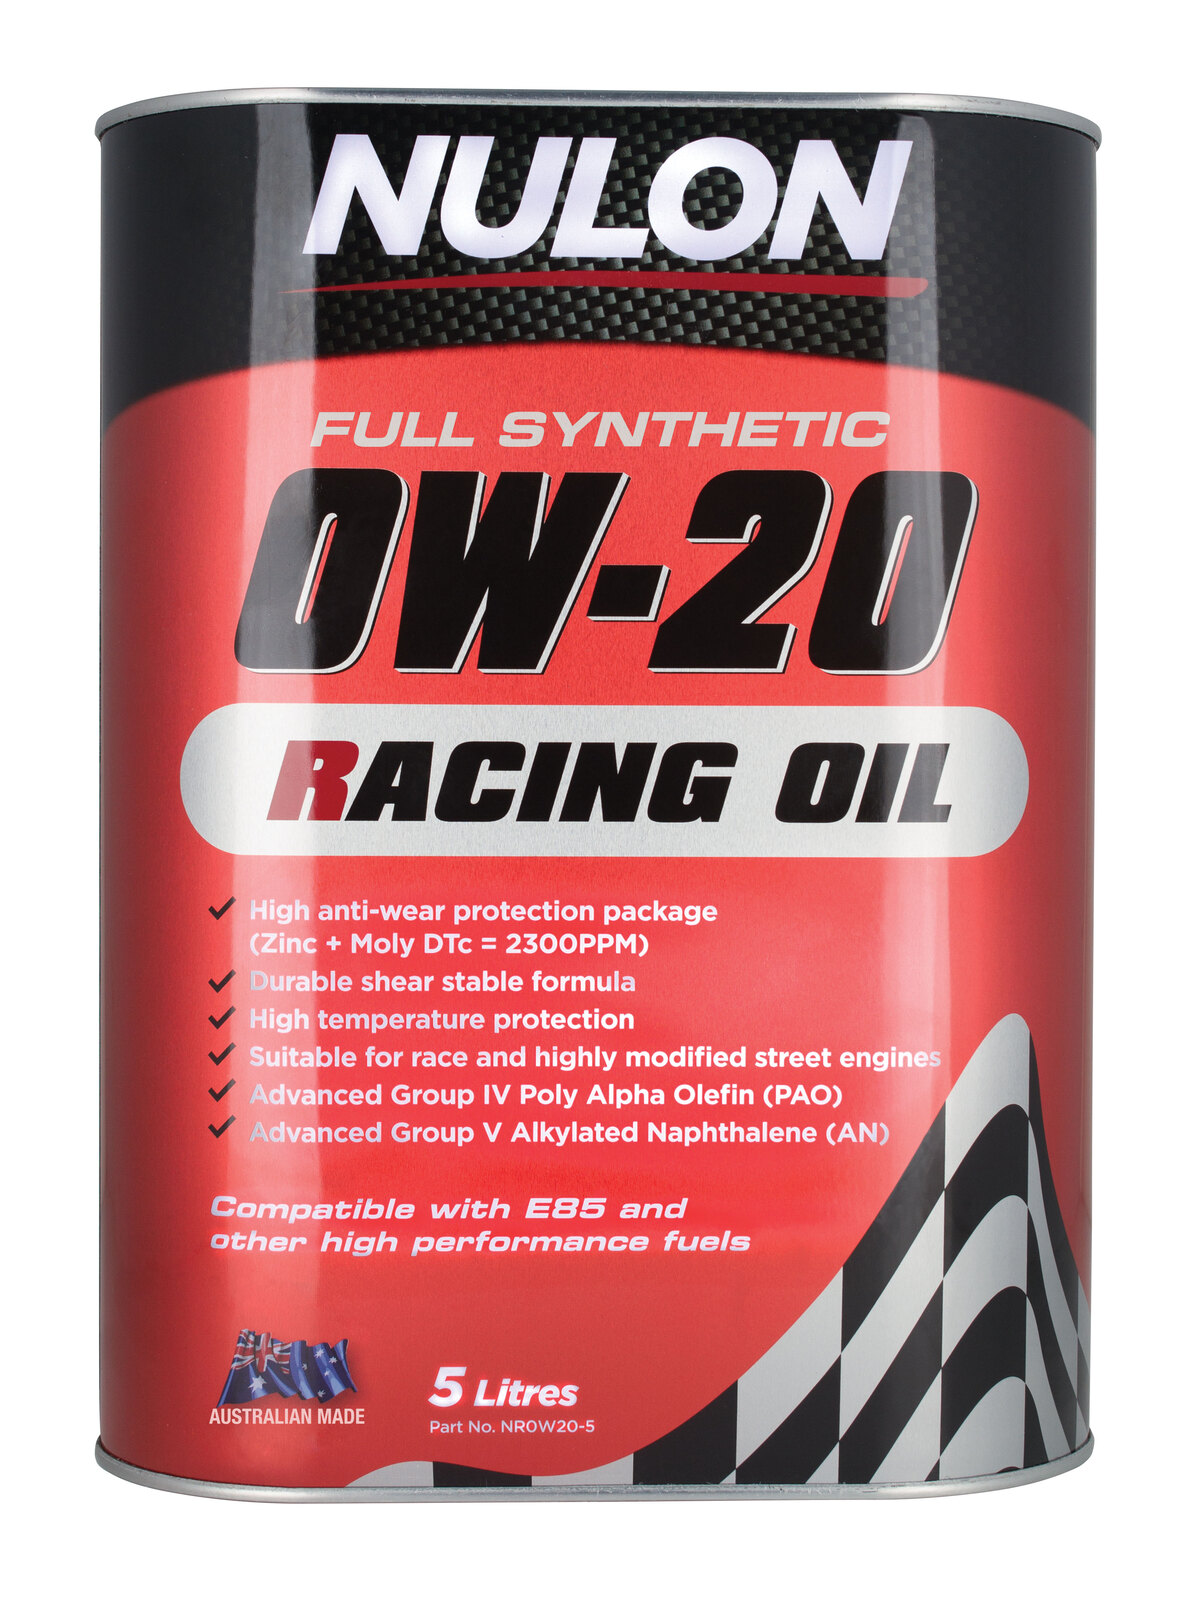 NULON Full Synthetic 0W-20 Racing Oil, Each